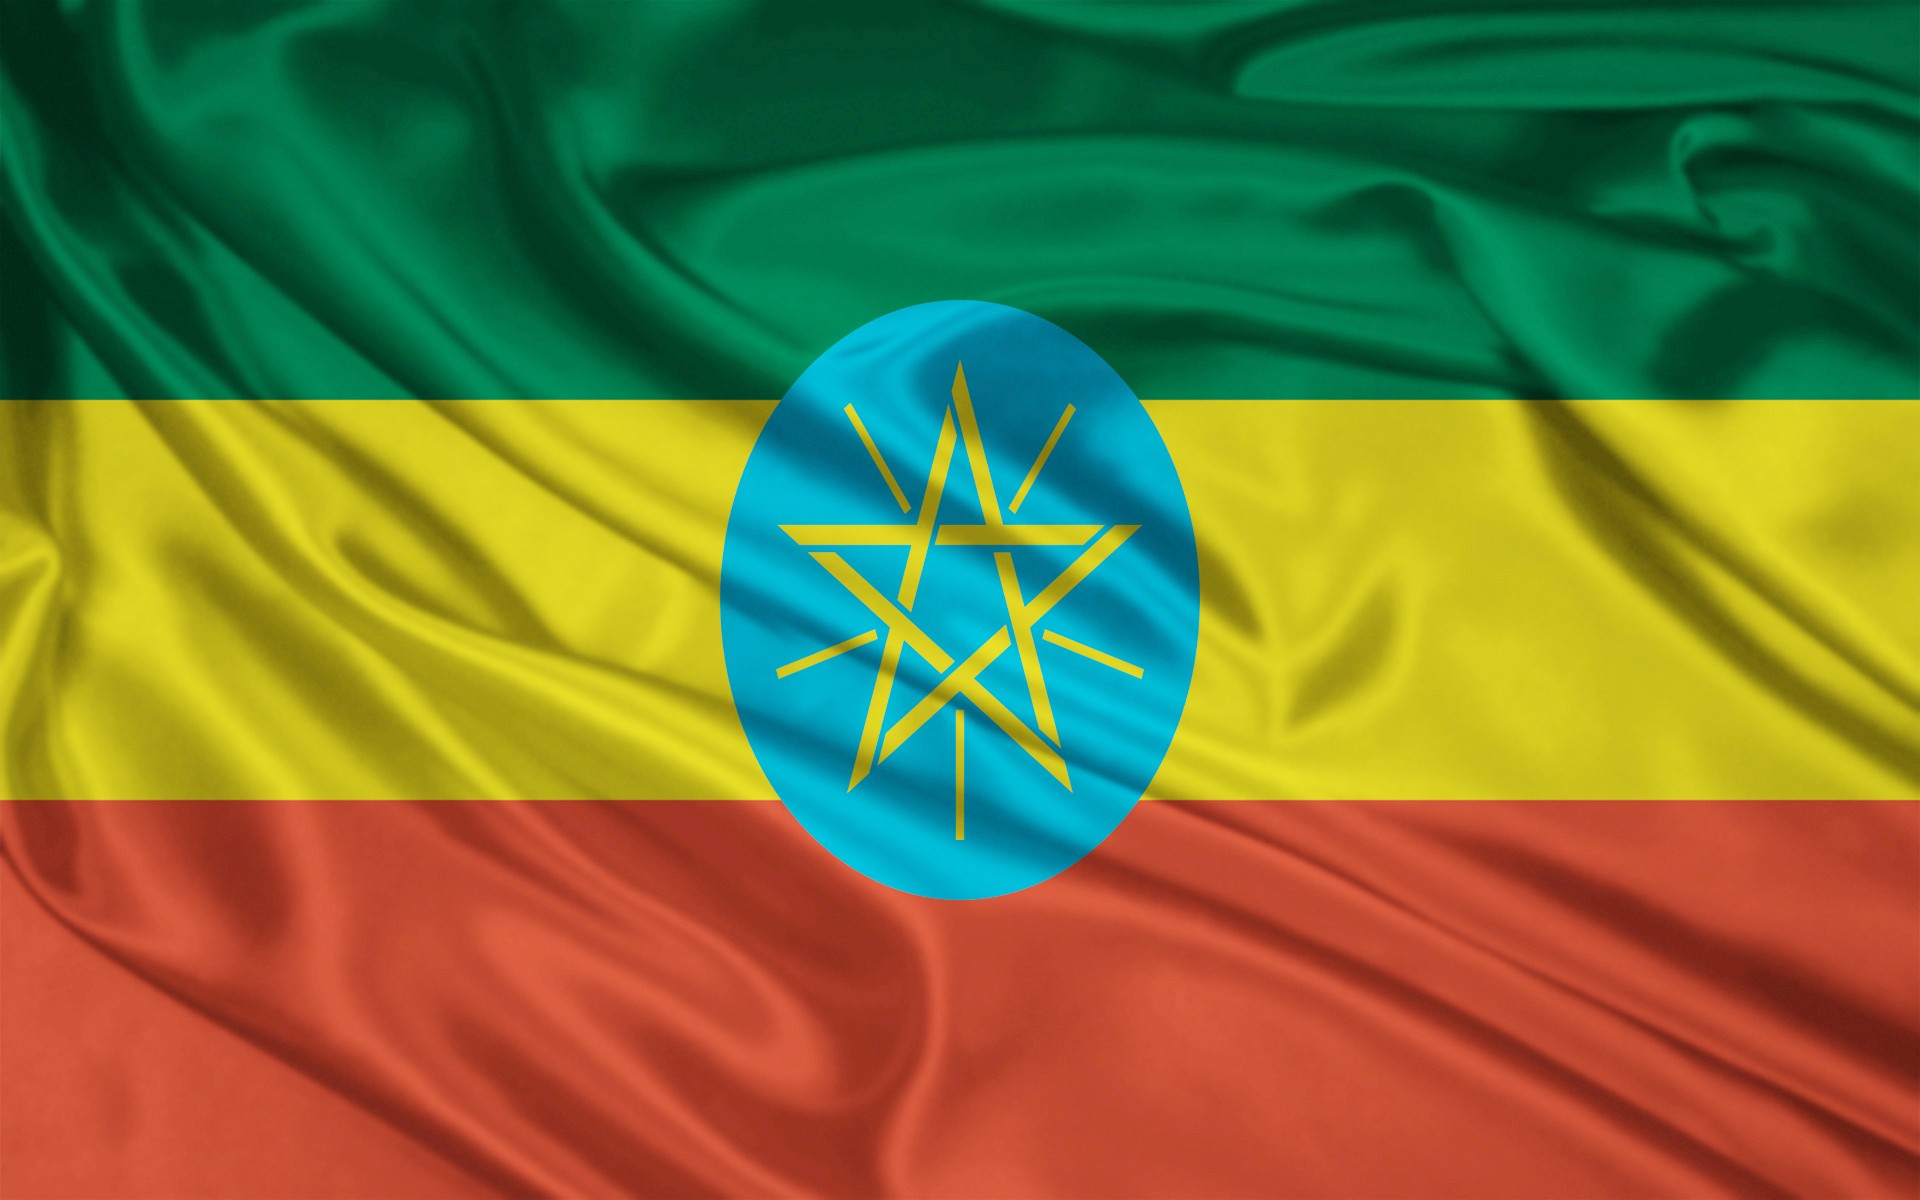 Etiopian-flag-2.jpg